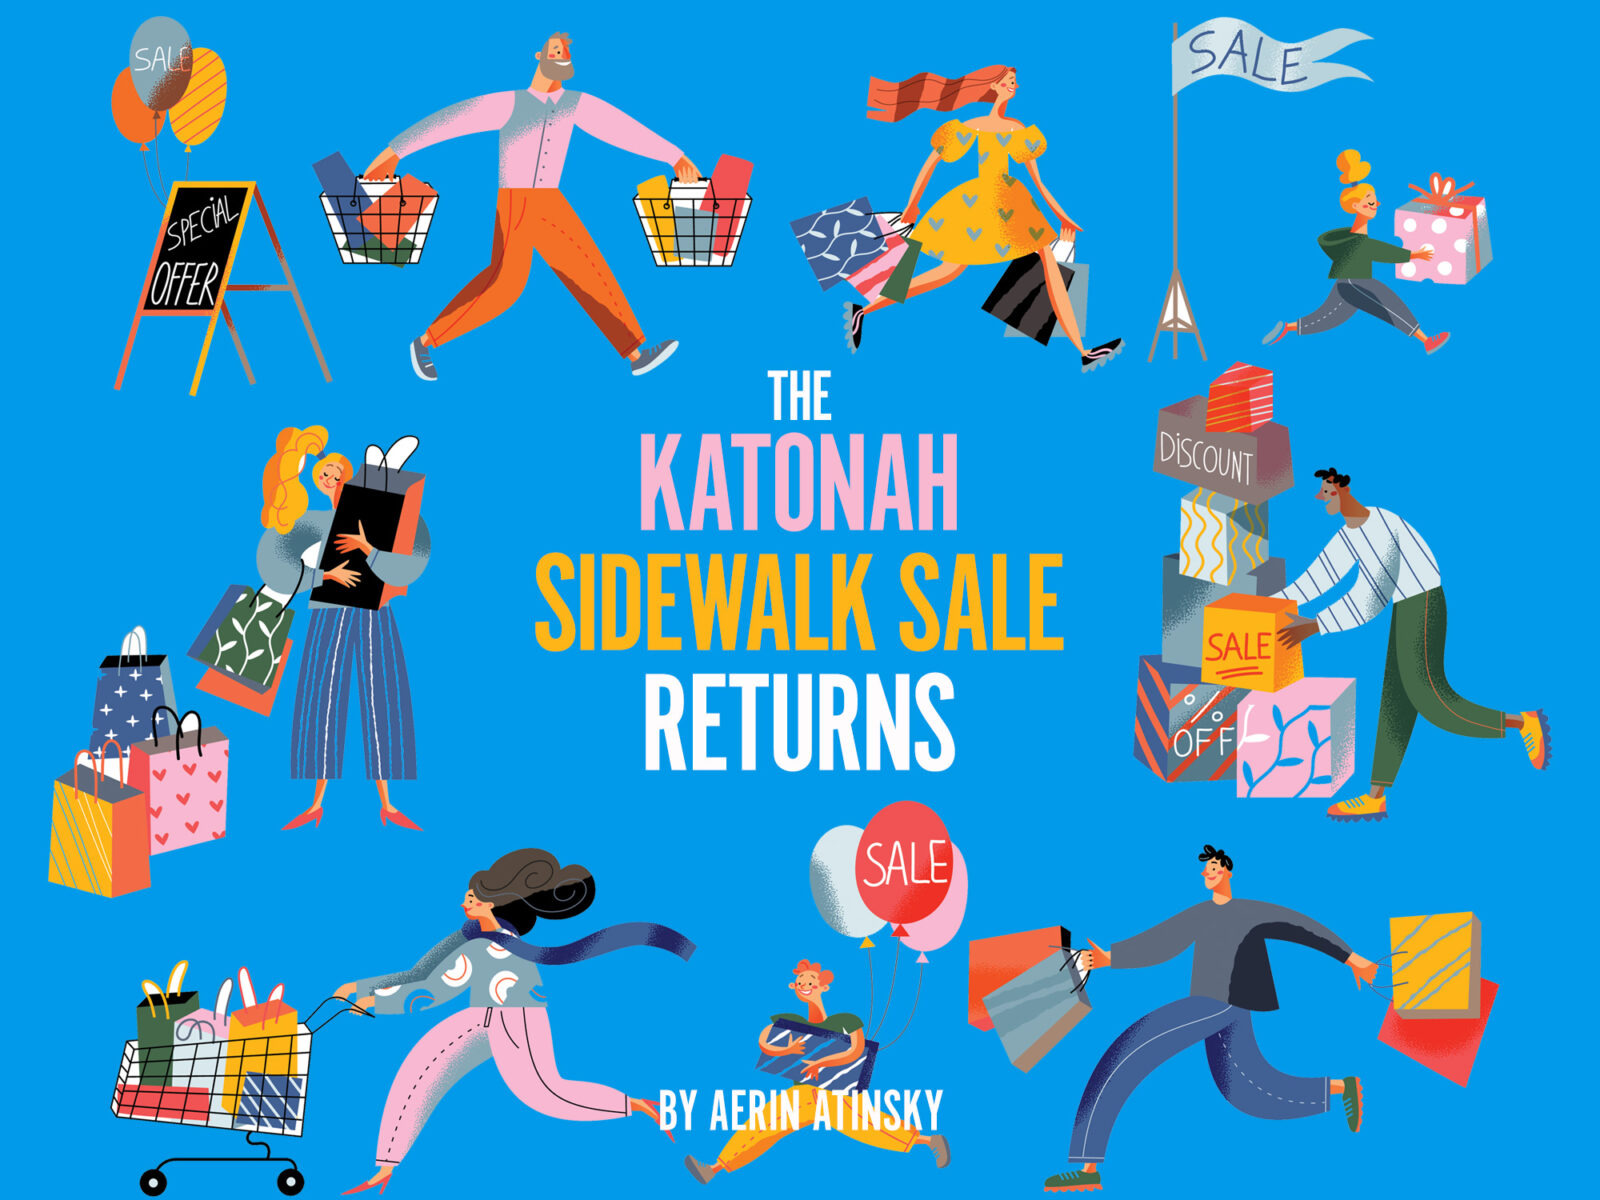 Katonah’s Sidewalk Sale is back